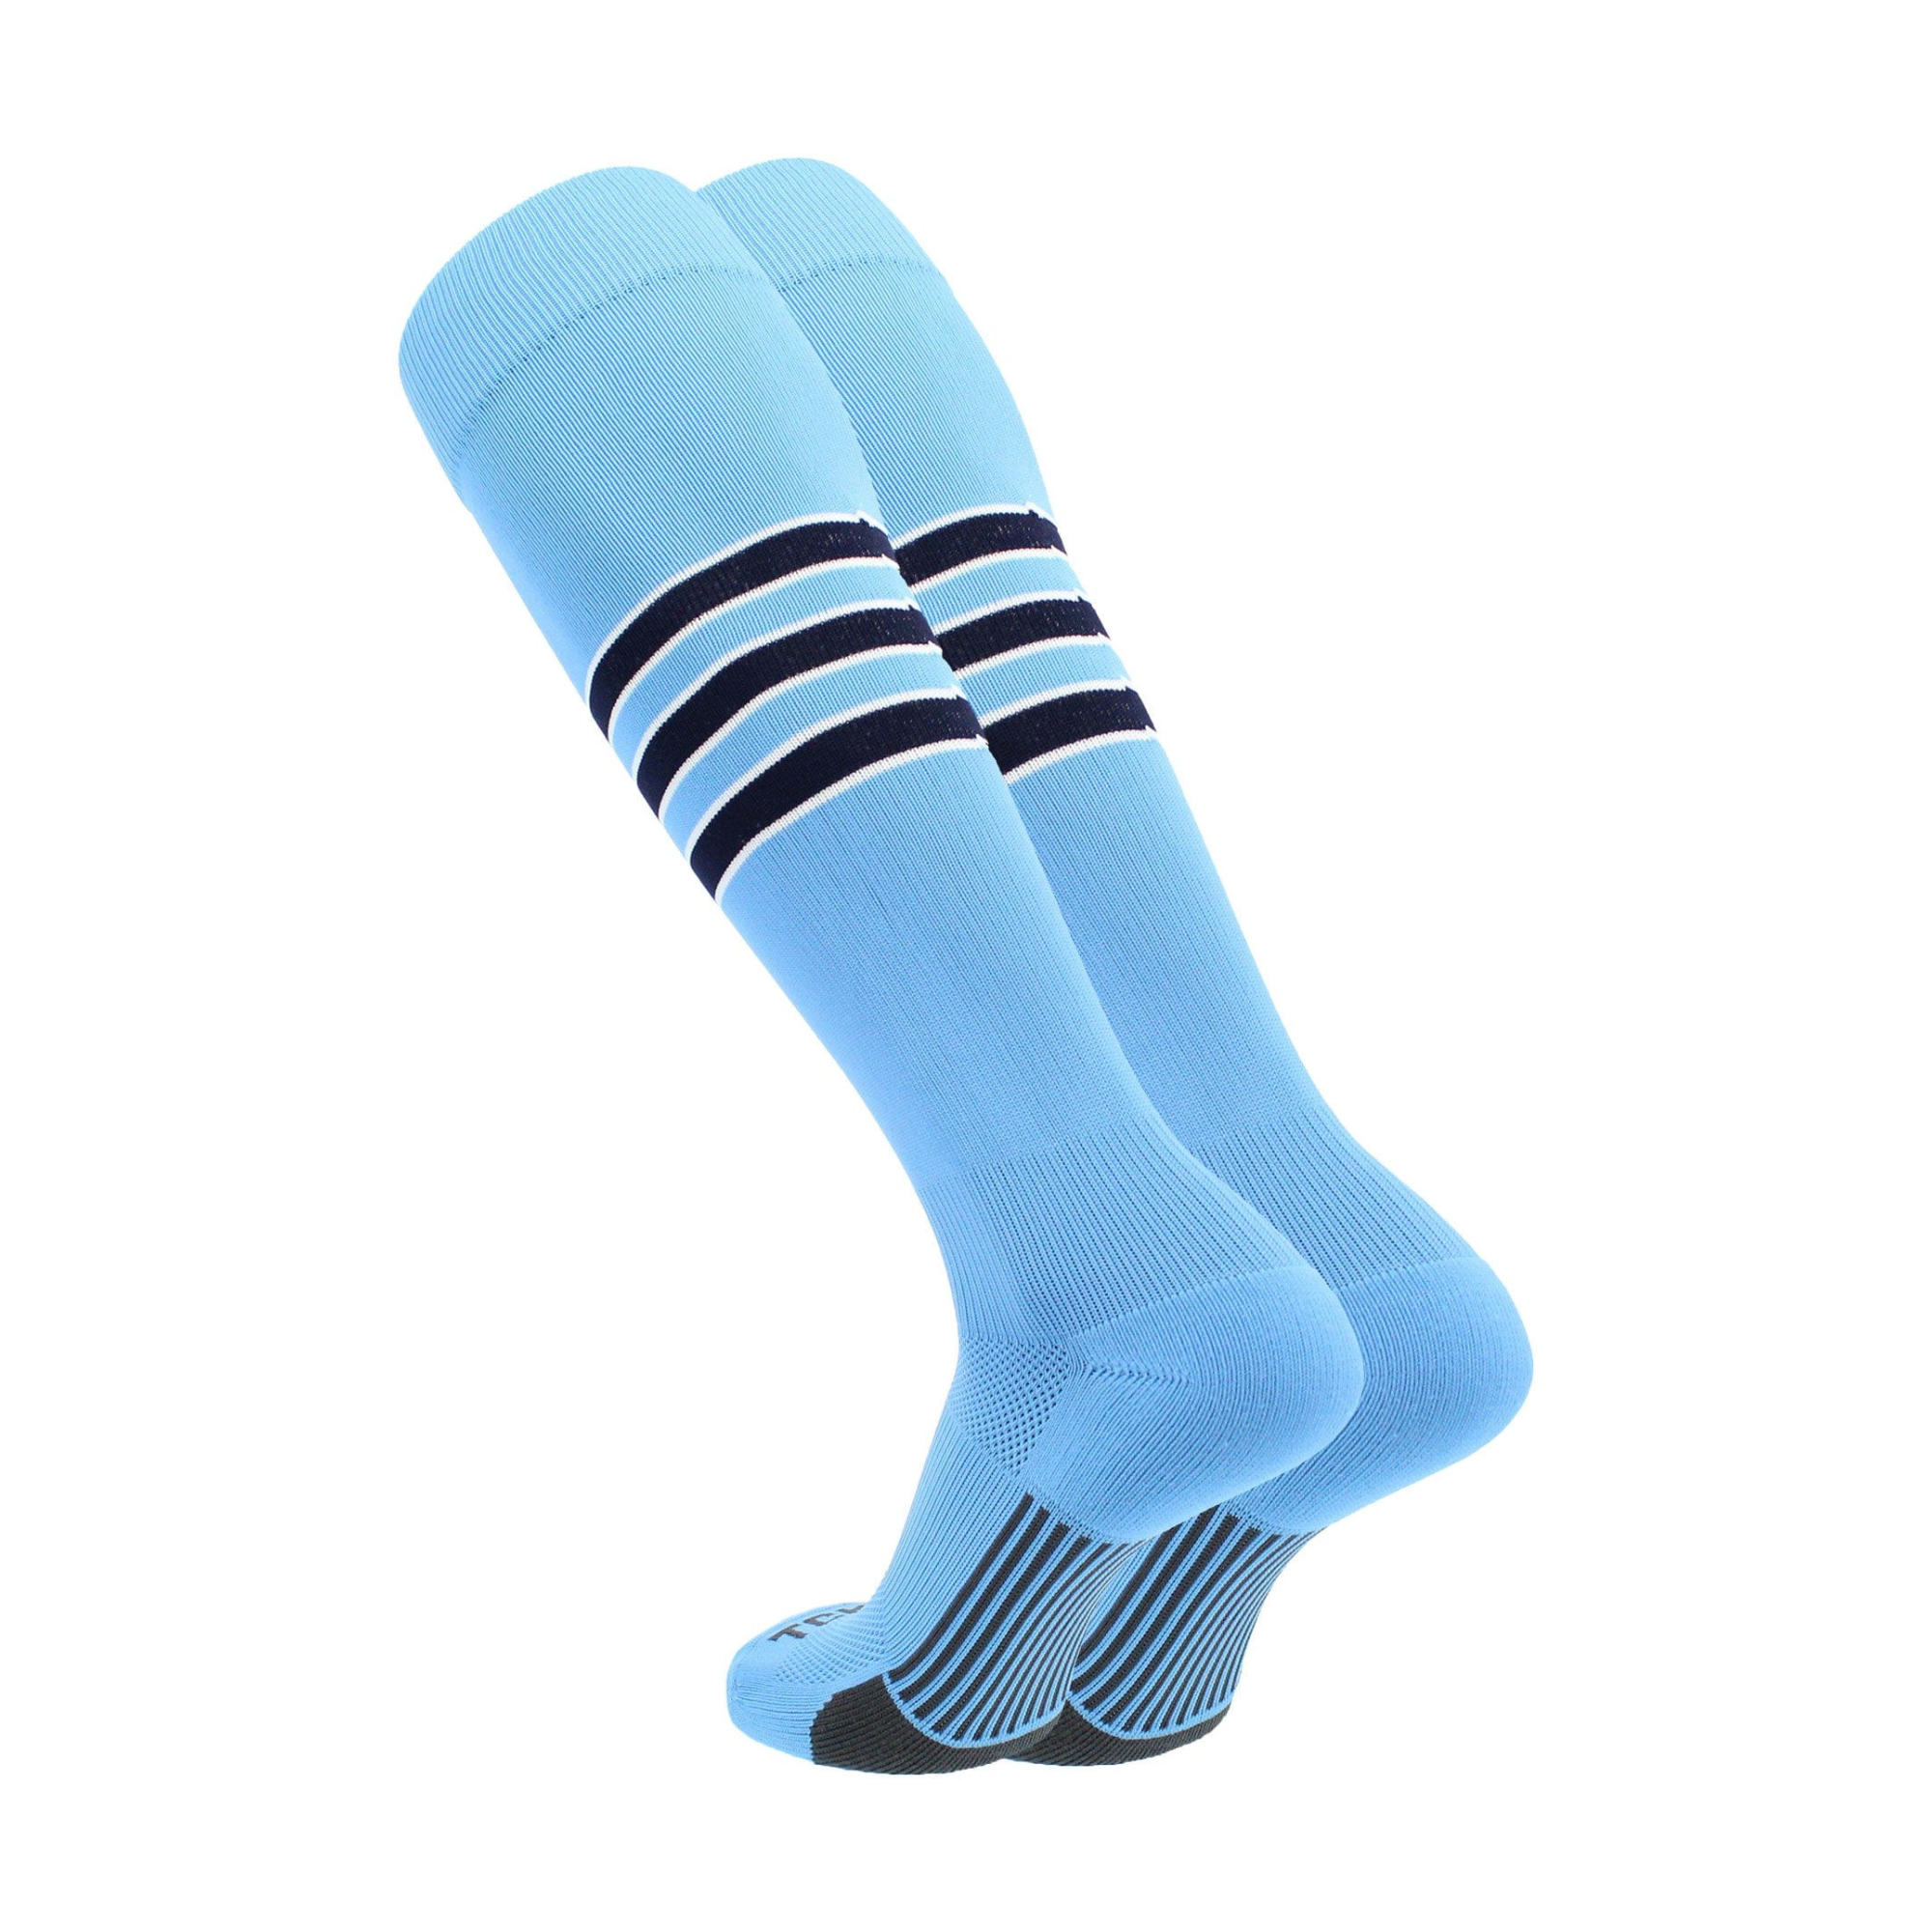 TCK Dugout Series - Columbia Blue White Navy Sock